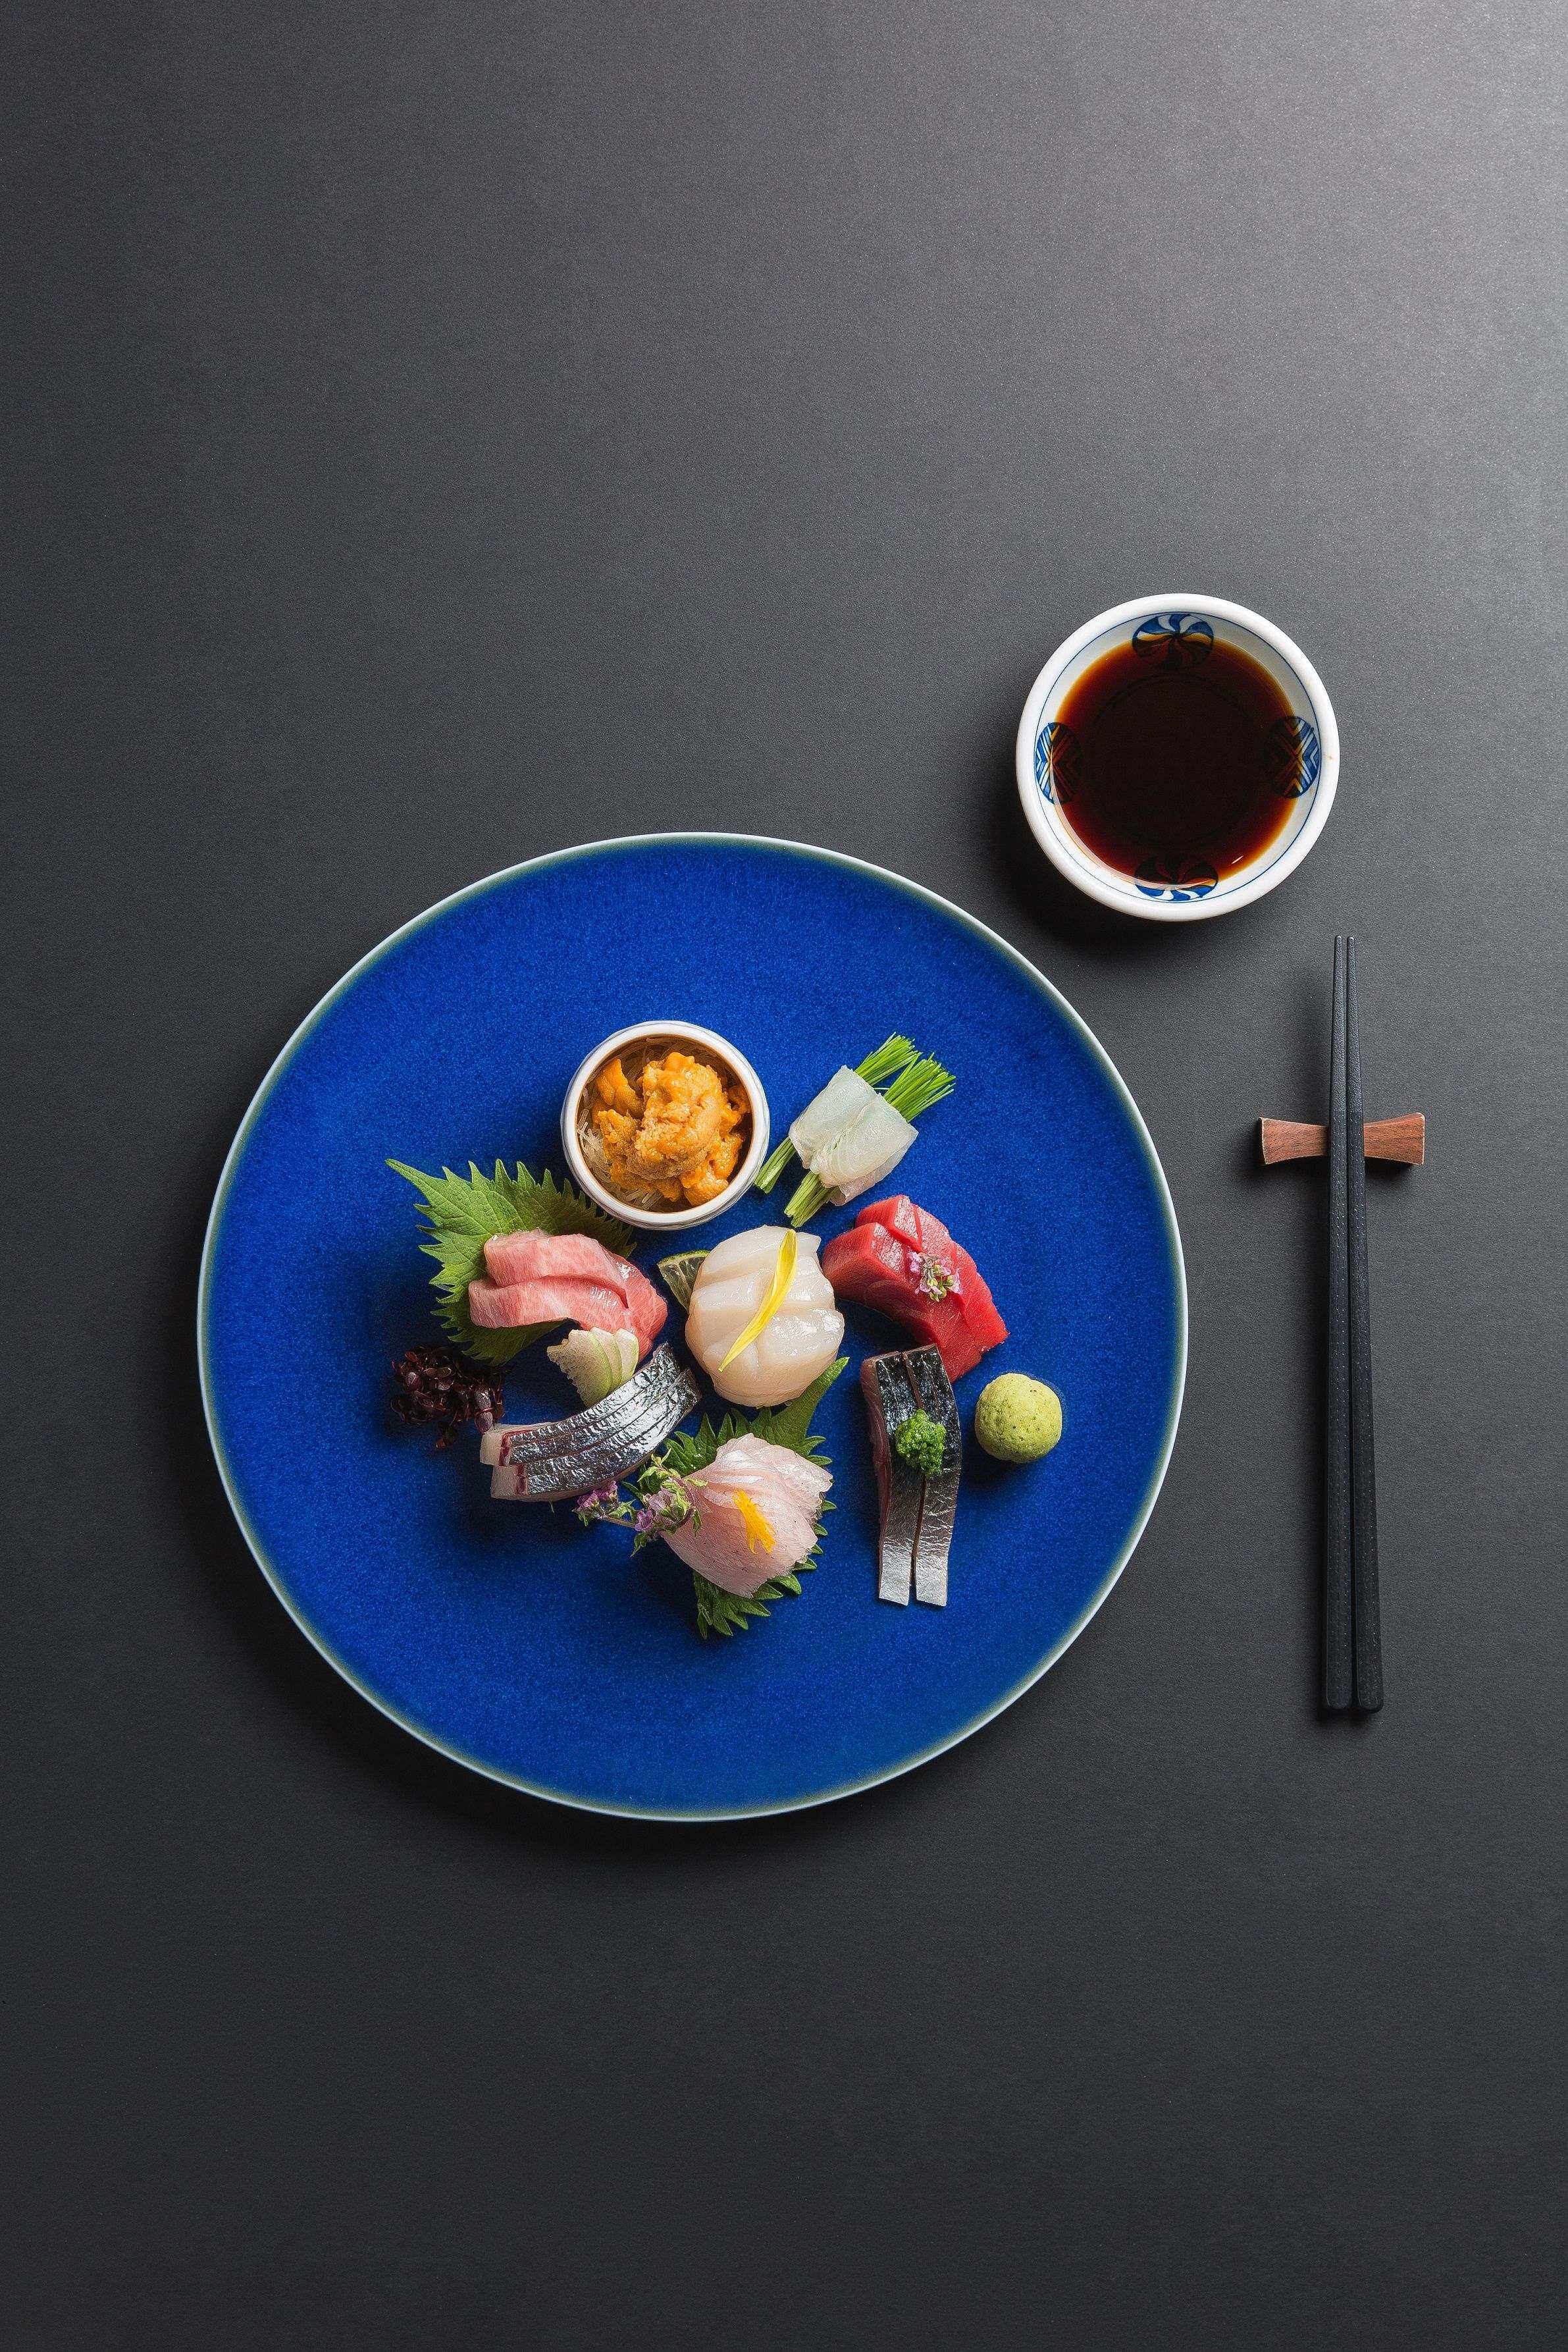 FUMI-japanese-restaurant-omakase-kaiseki-food-lifestyle-dining-lkf